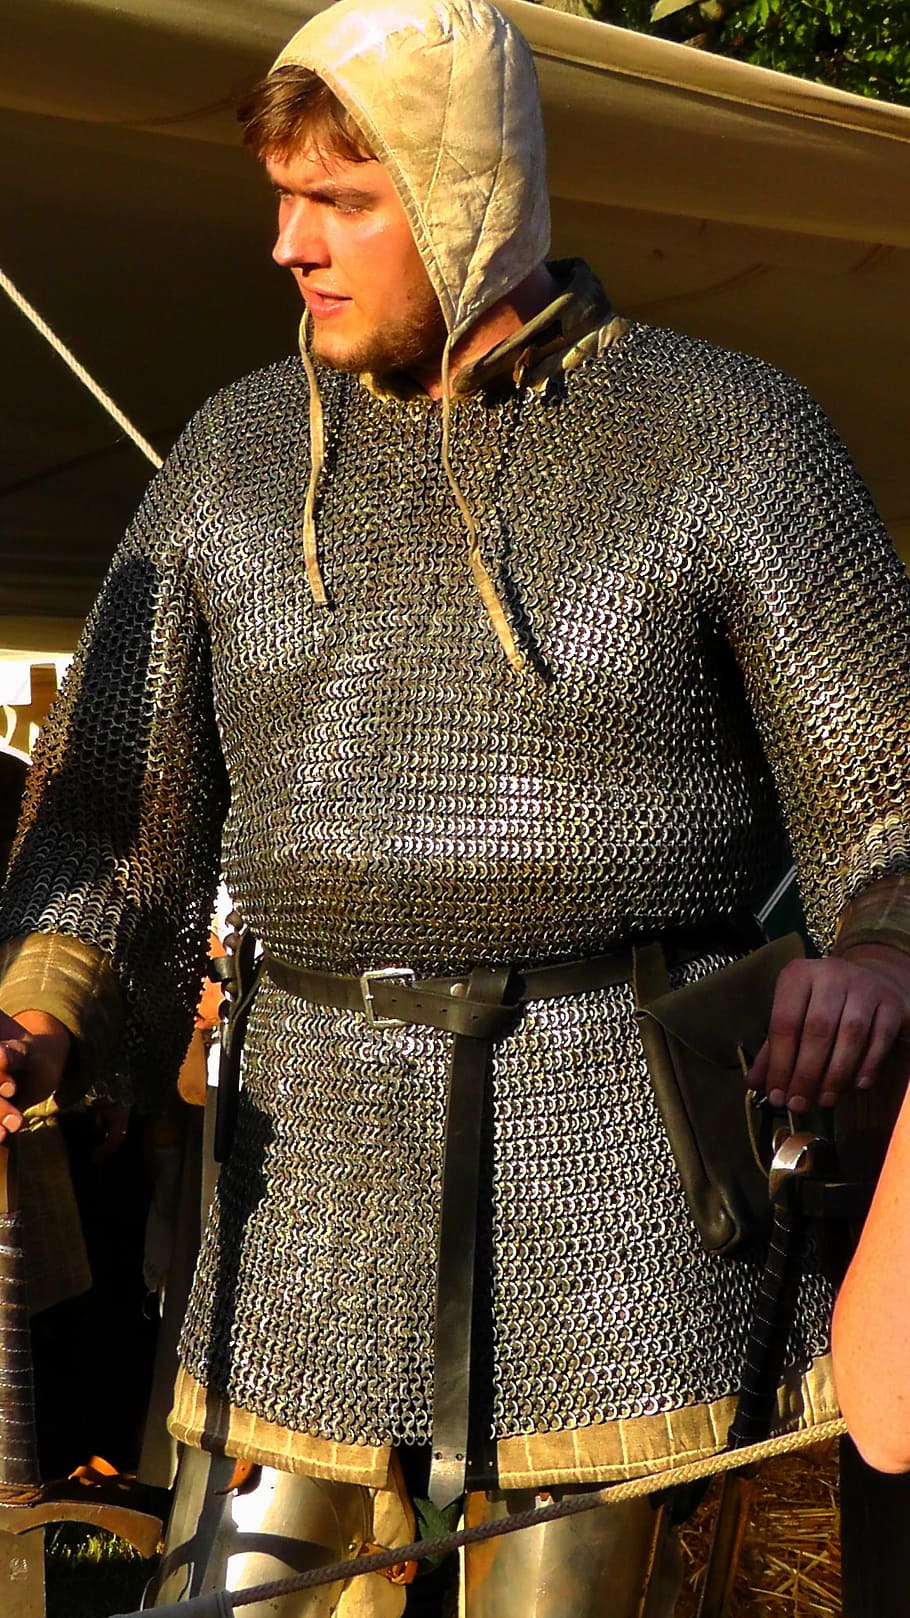 manusia, mengenakan, chainmail armor, knight, armor, knighthood, sekelompok orang, helm ksatria, abad pertengahan, tua